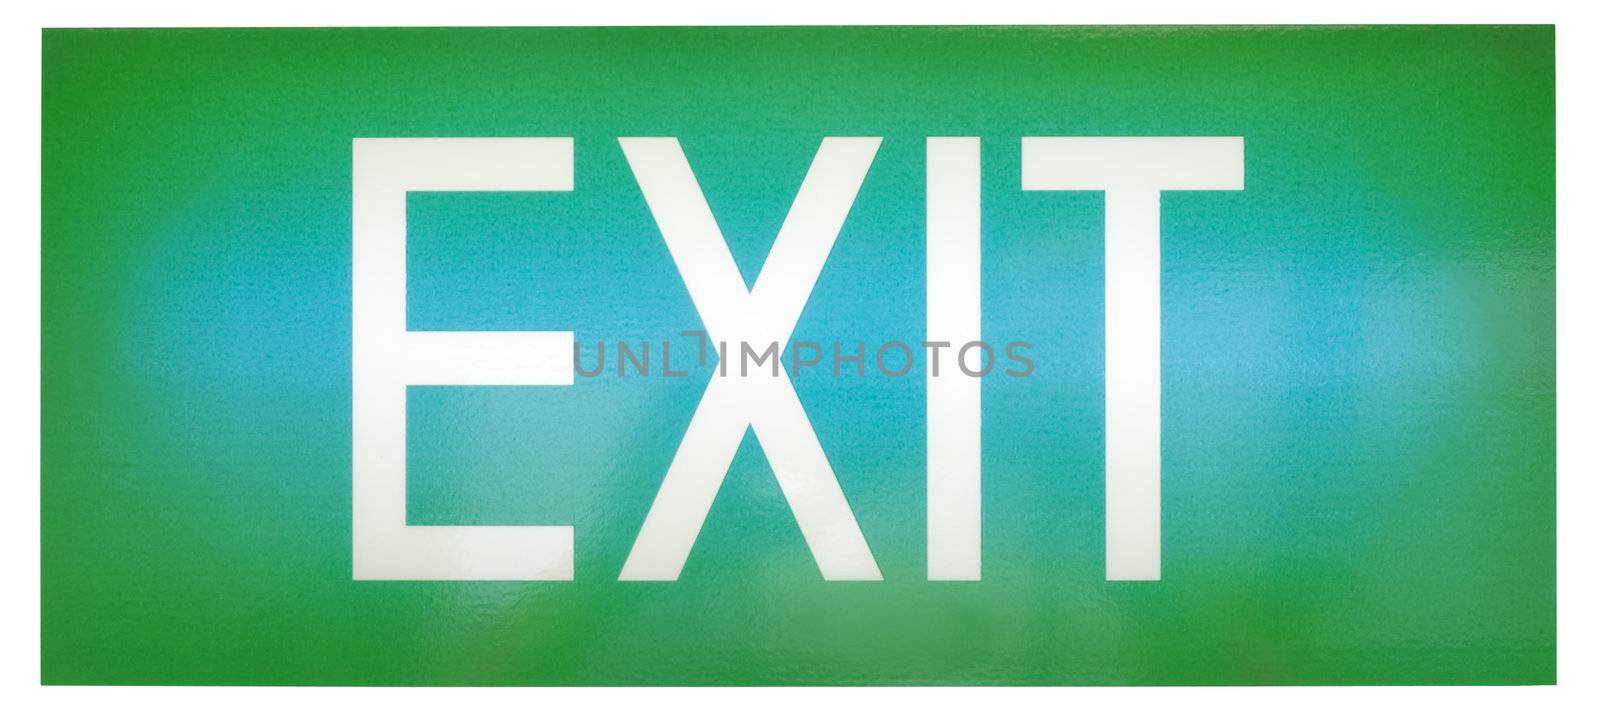 Green emergency exit sign by Jaykayl